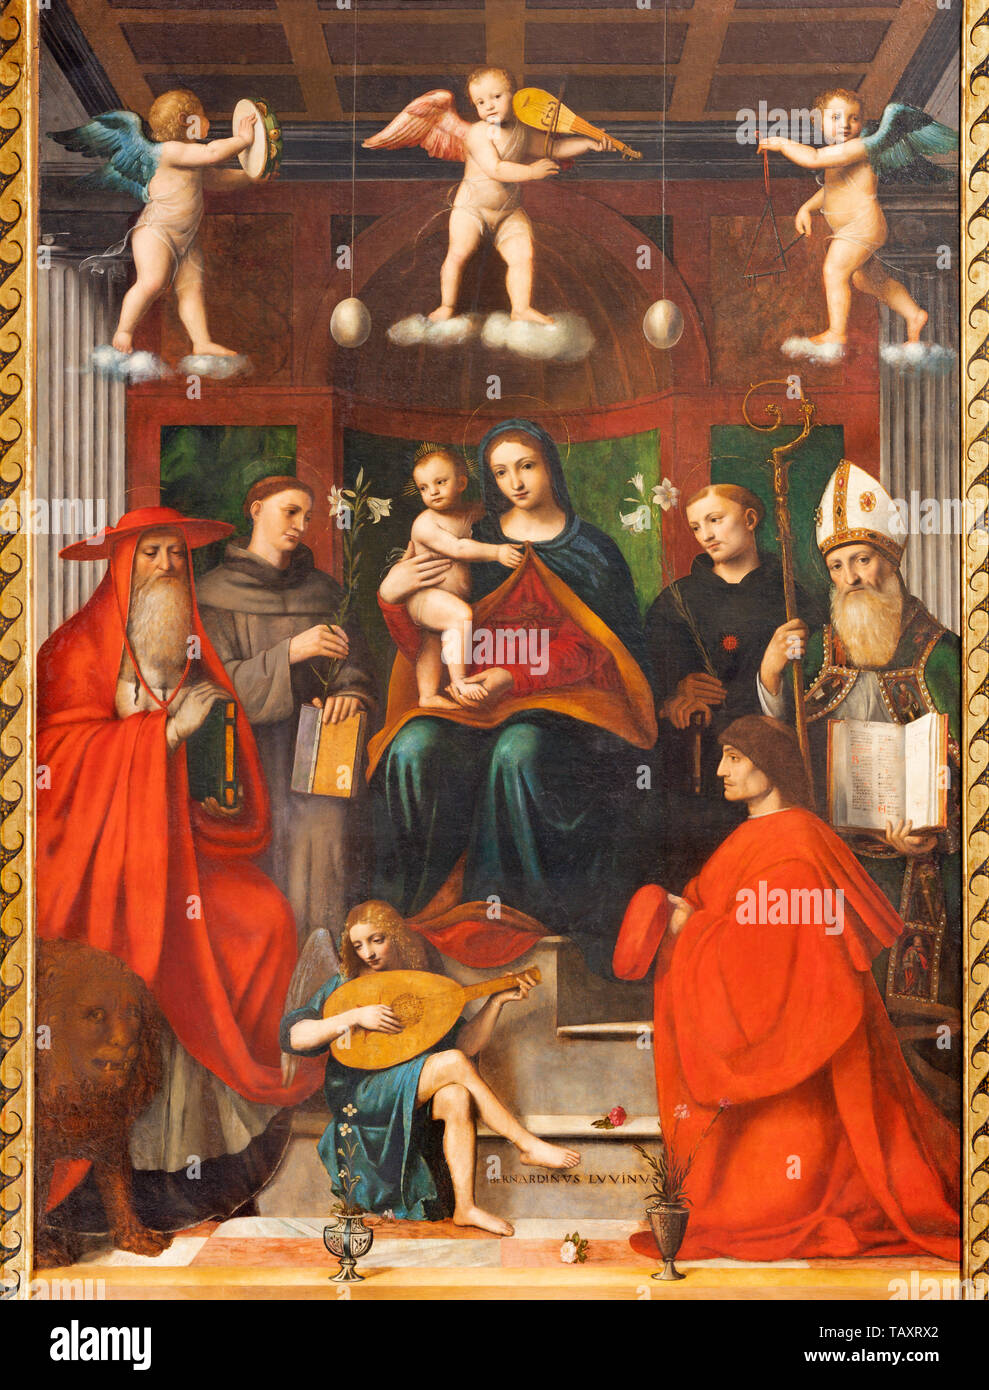 COMO, ITALY - MAY 8, 2015: The painting Madonna among the saints - Sacra Conversazione in Duomo by Bernardino Luini (1481- 1532). Stock Photo